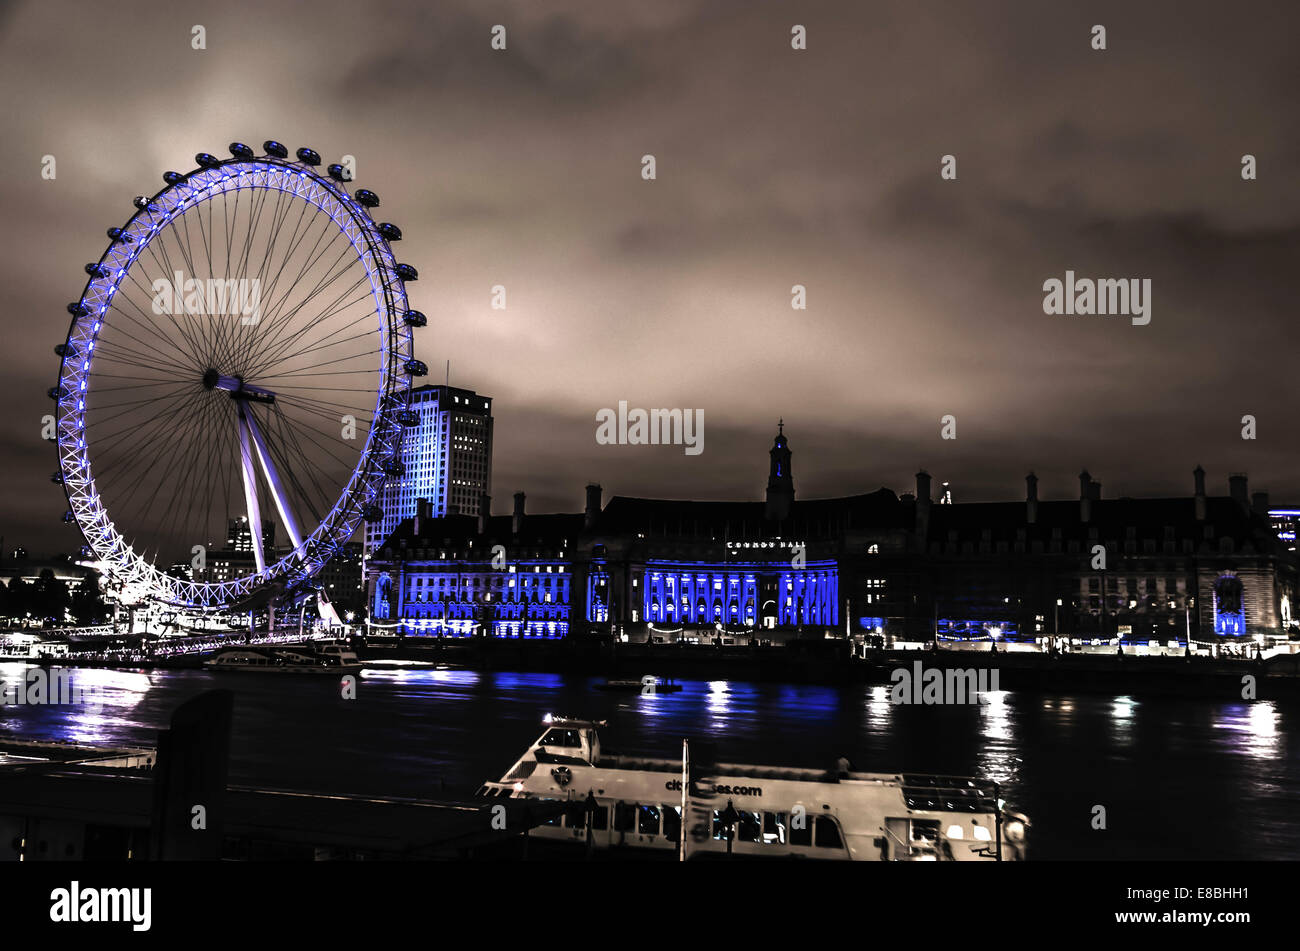 El London Eye de noche paisaje oscuro Foto de stock